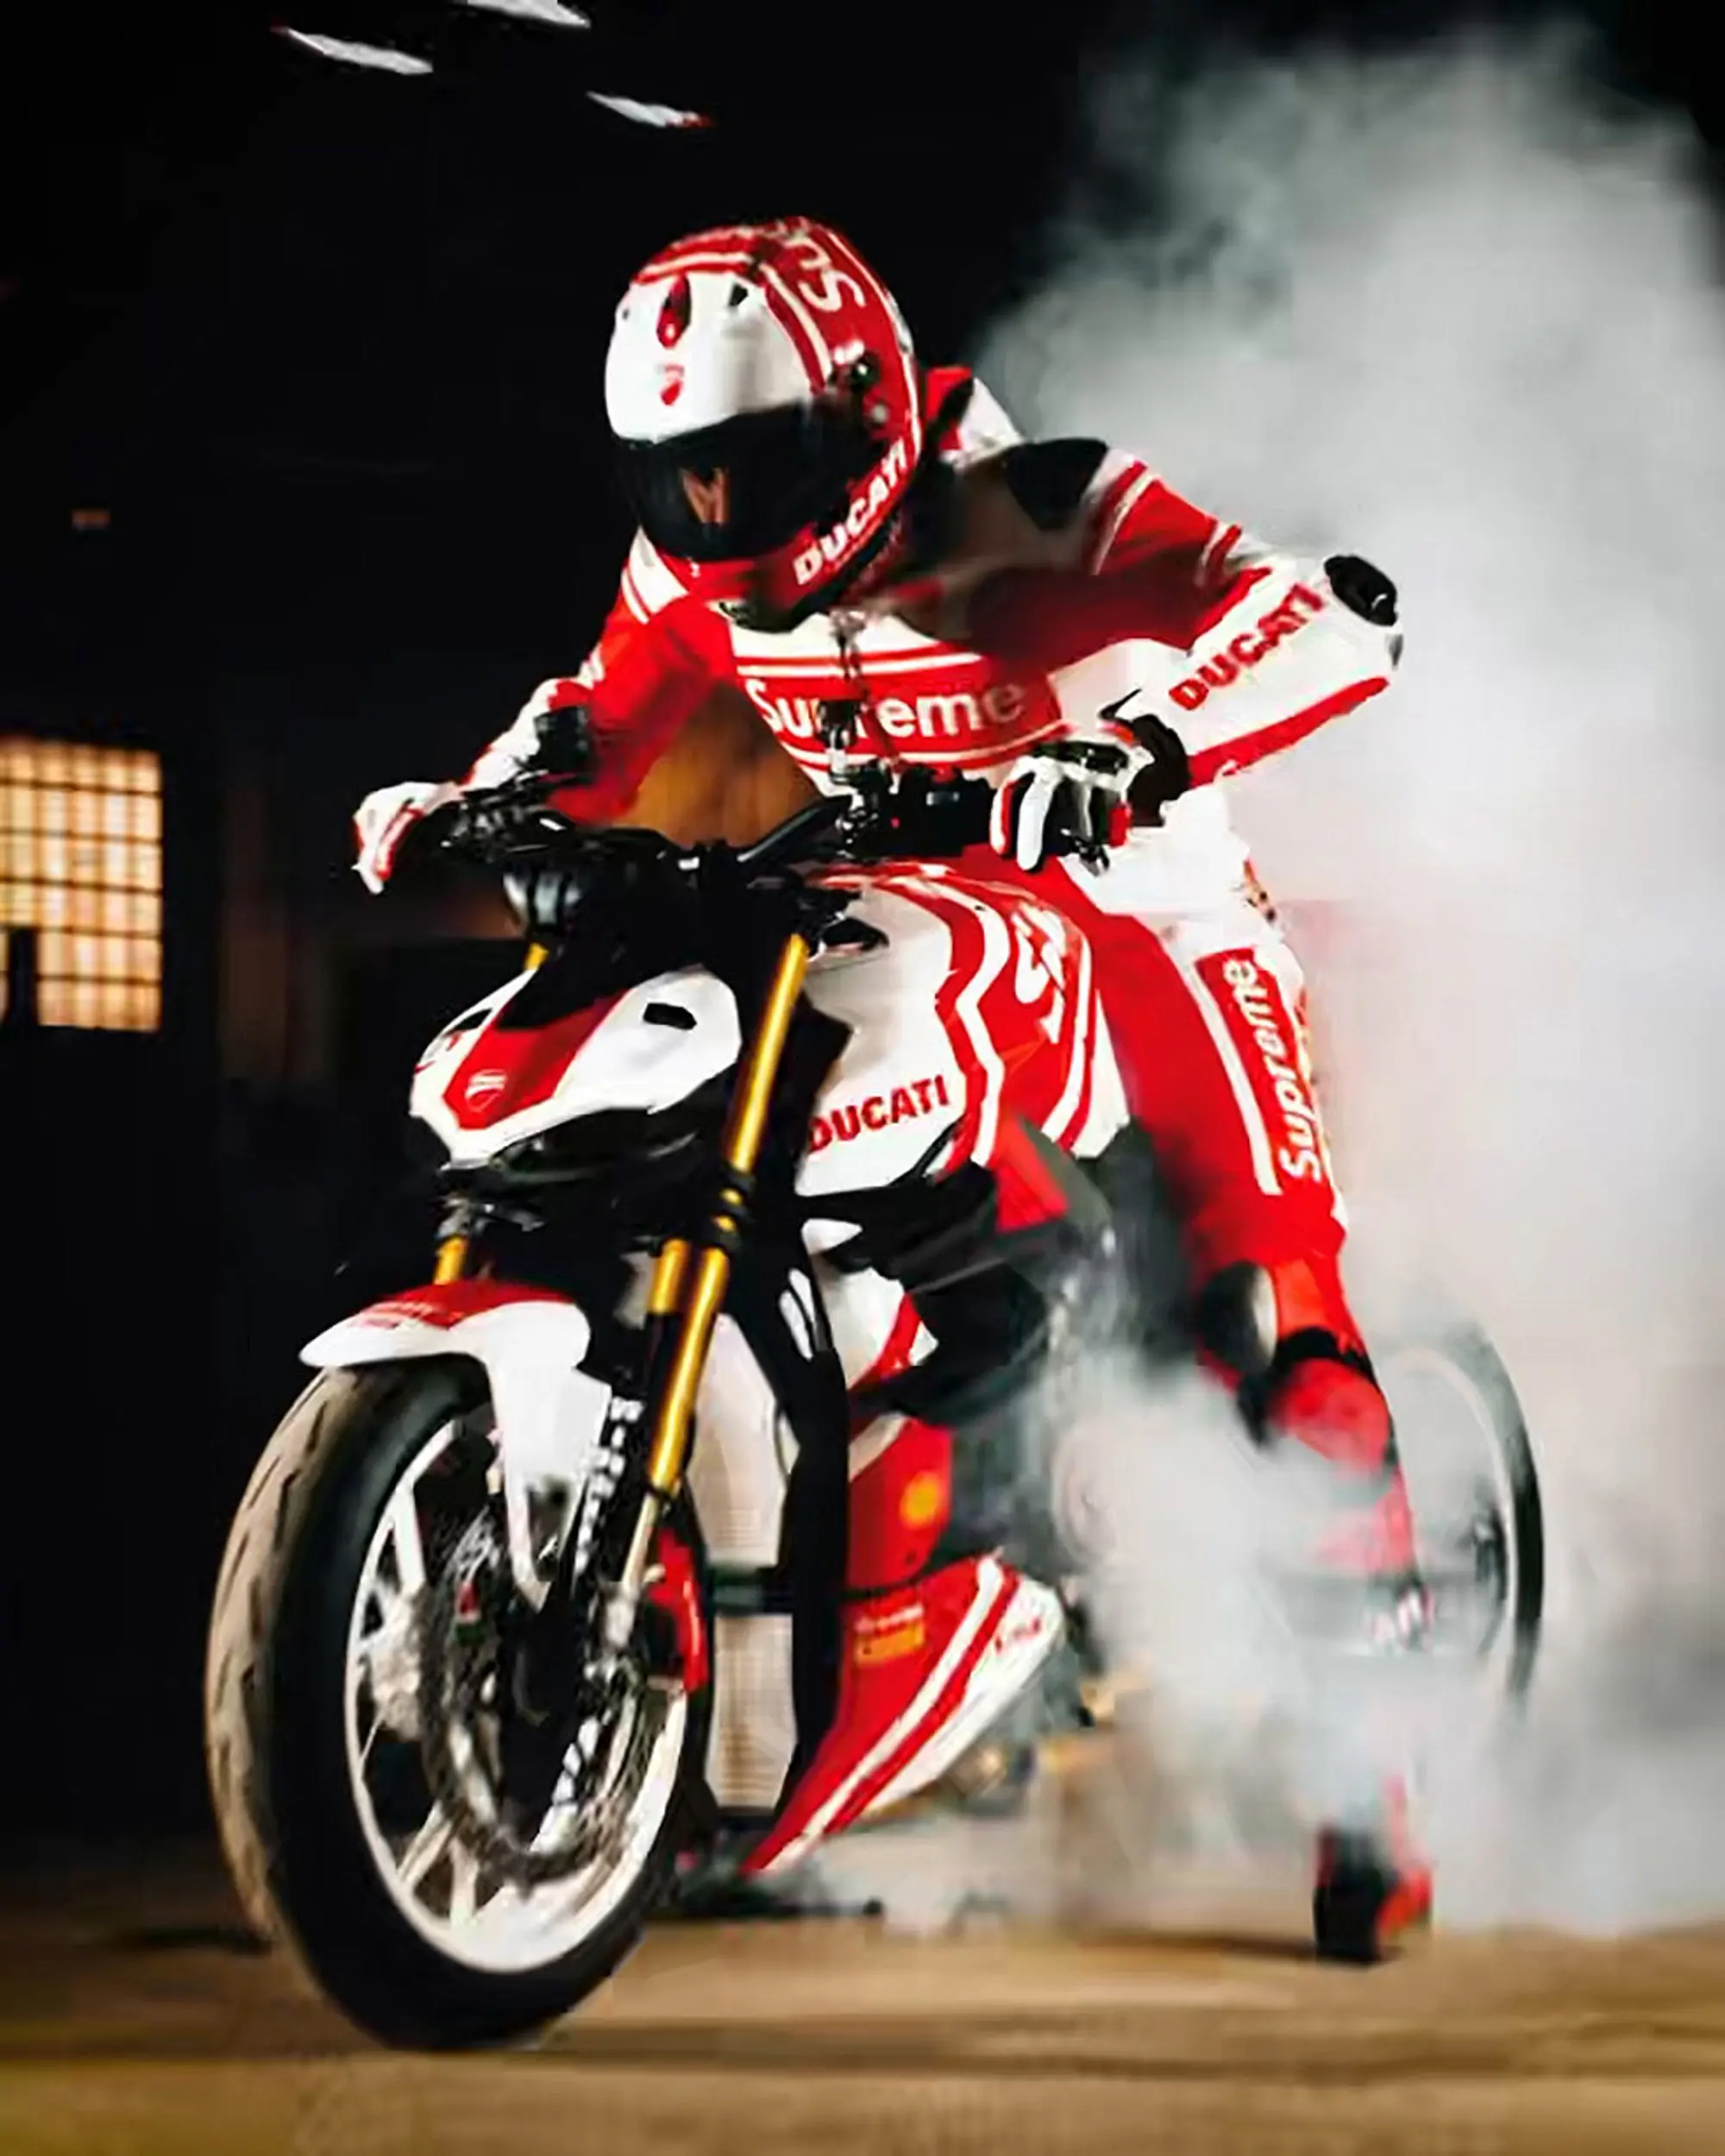 Supreme®/Ducati®/Arai® Corsair-X Helmet